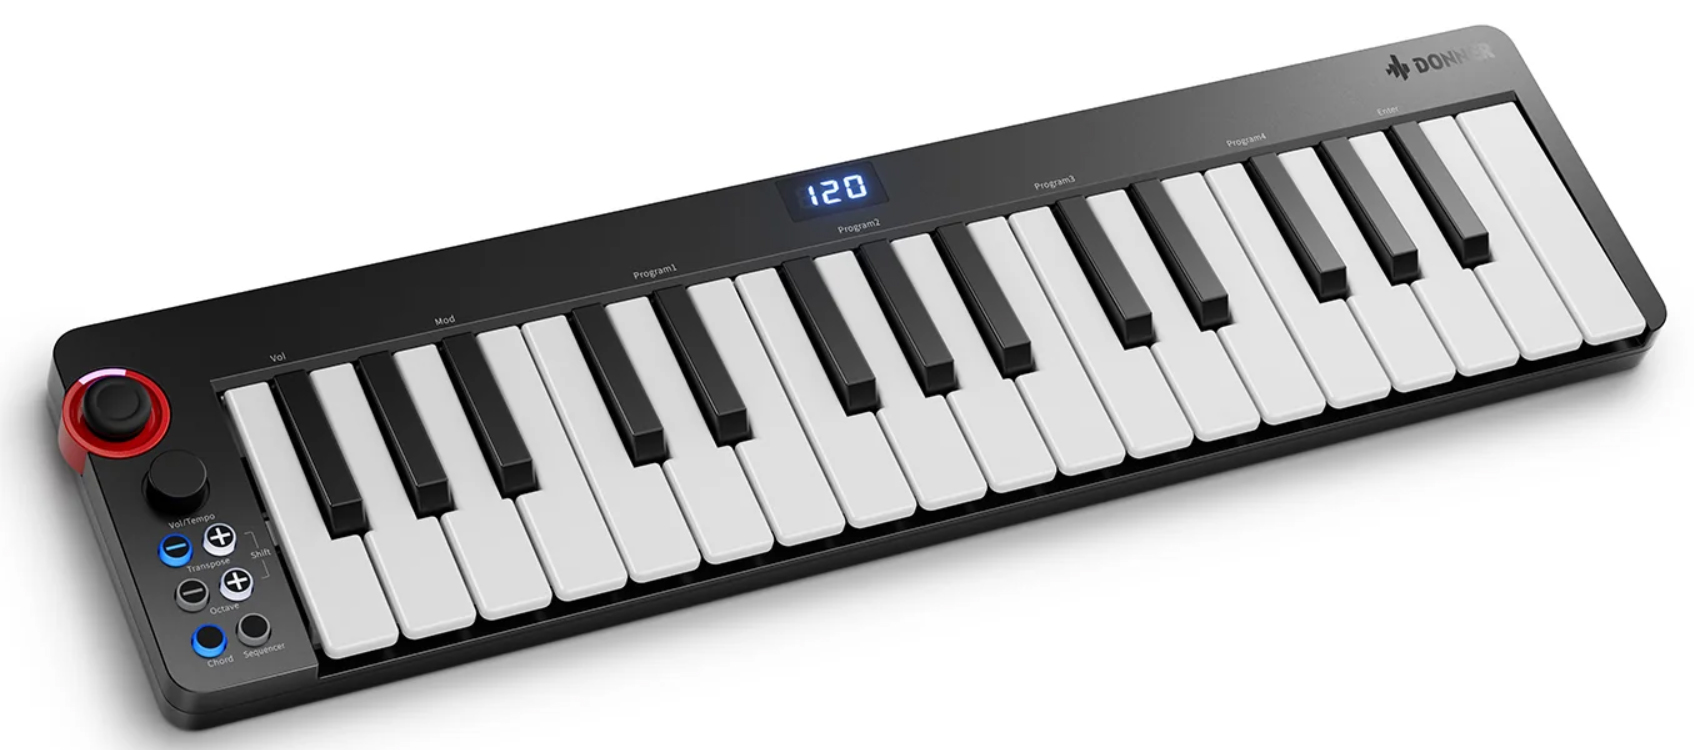 MIDI клавиатуры Donner N-32 m vave chocolate bt беспроводной midi контроллер перезаряжаемый 4 кнопки портативный midi ножной контроллер педаль app control